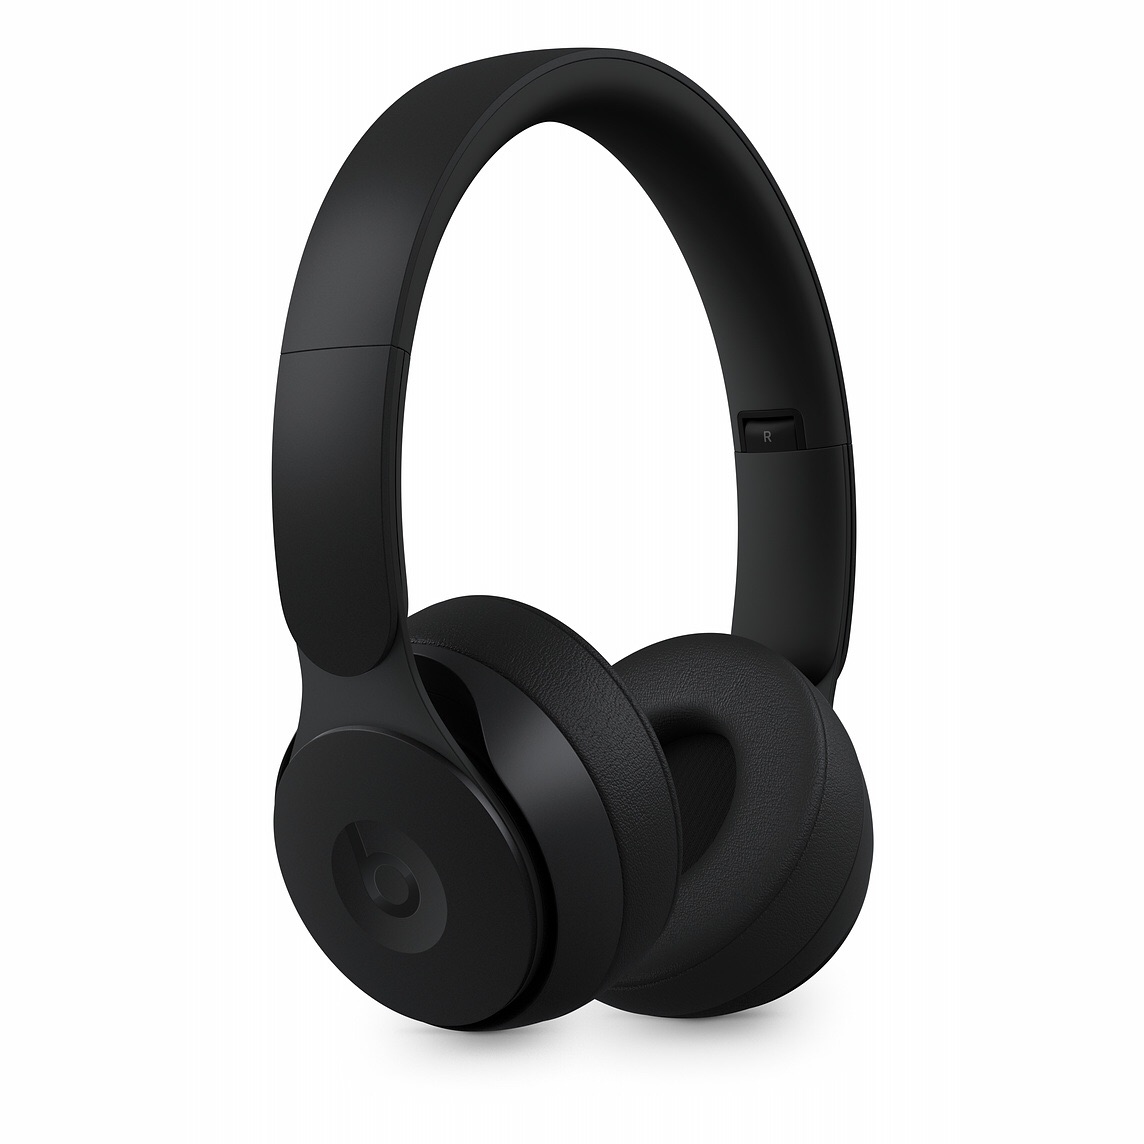 【Beats】Solo Pro Wireless 頭戴式降噪耳機